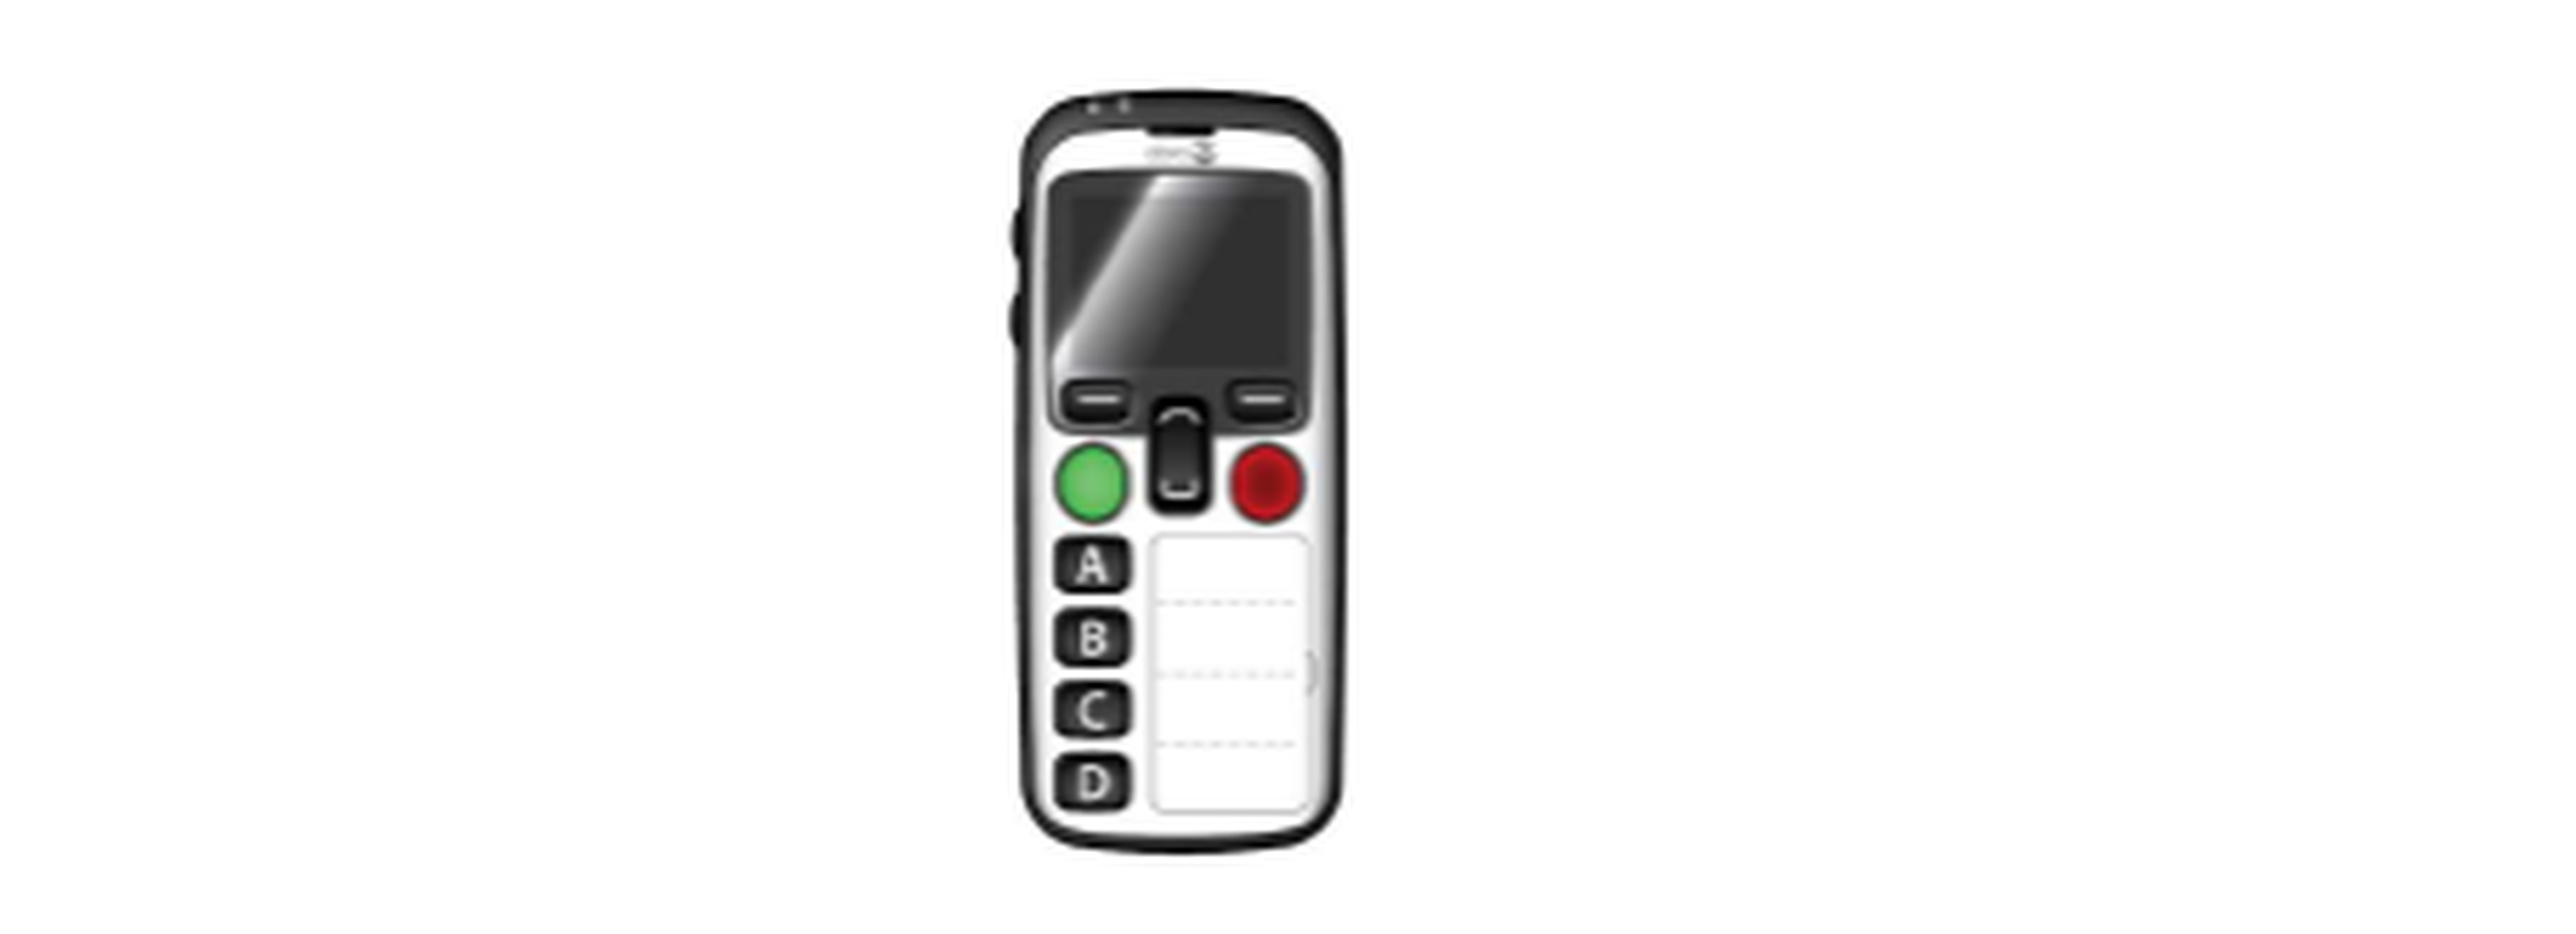 Doro presenta en MWC 2014 un teléfono dual SIM para seniors